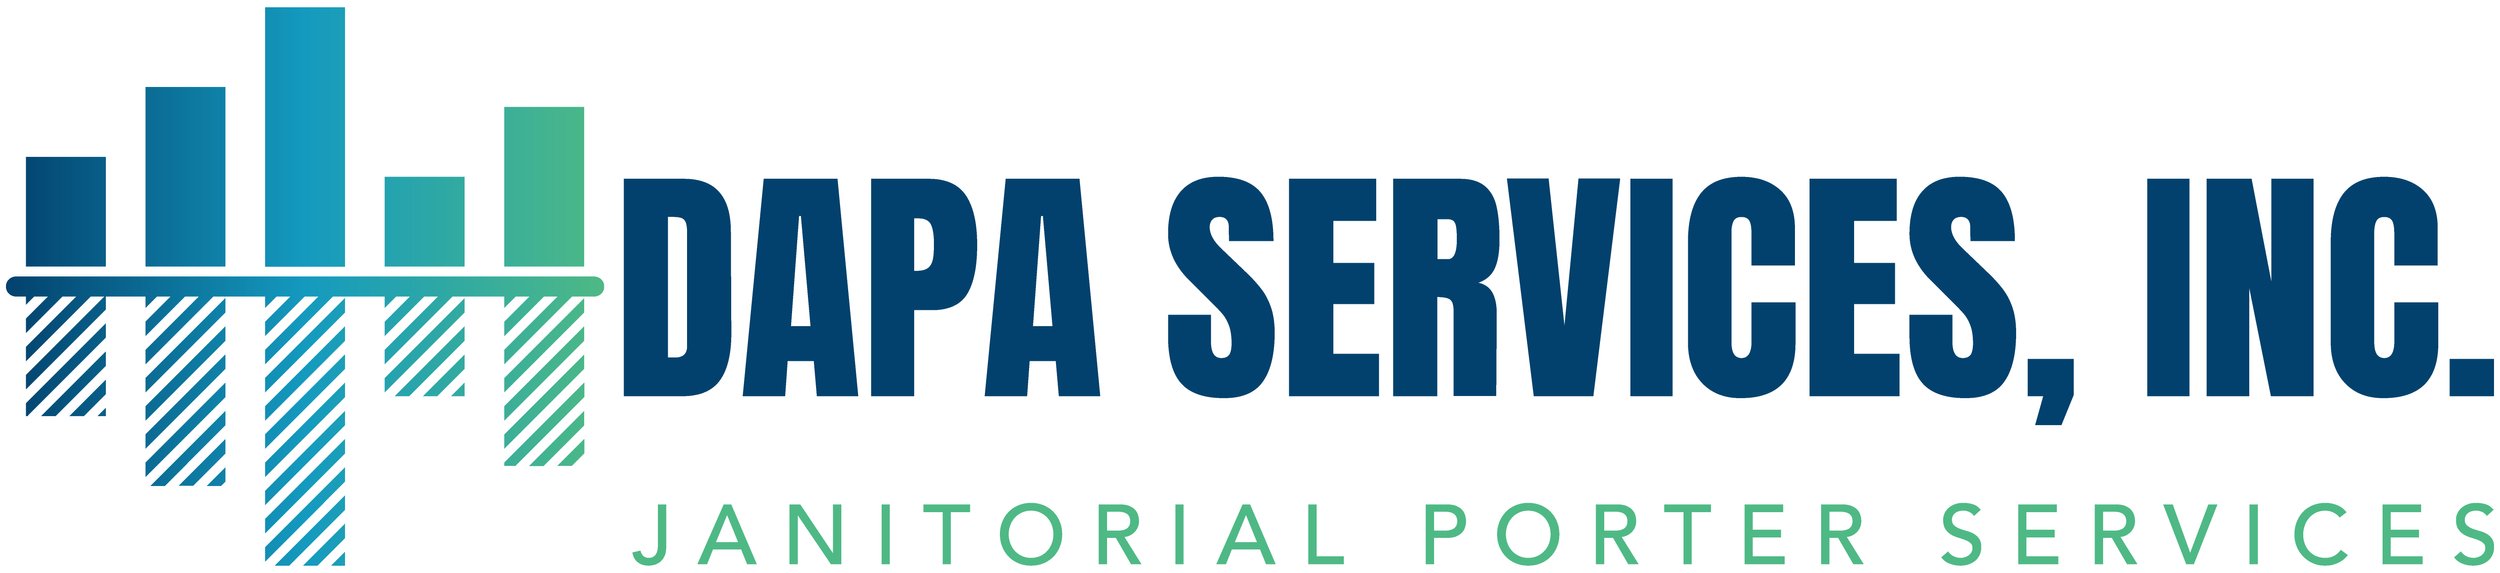 DAPA Services Inc.